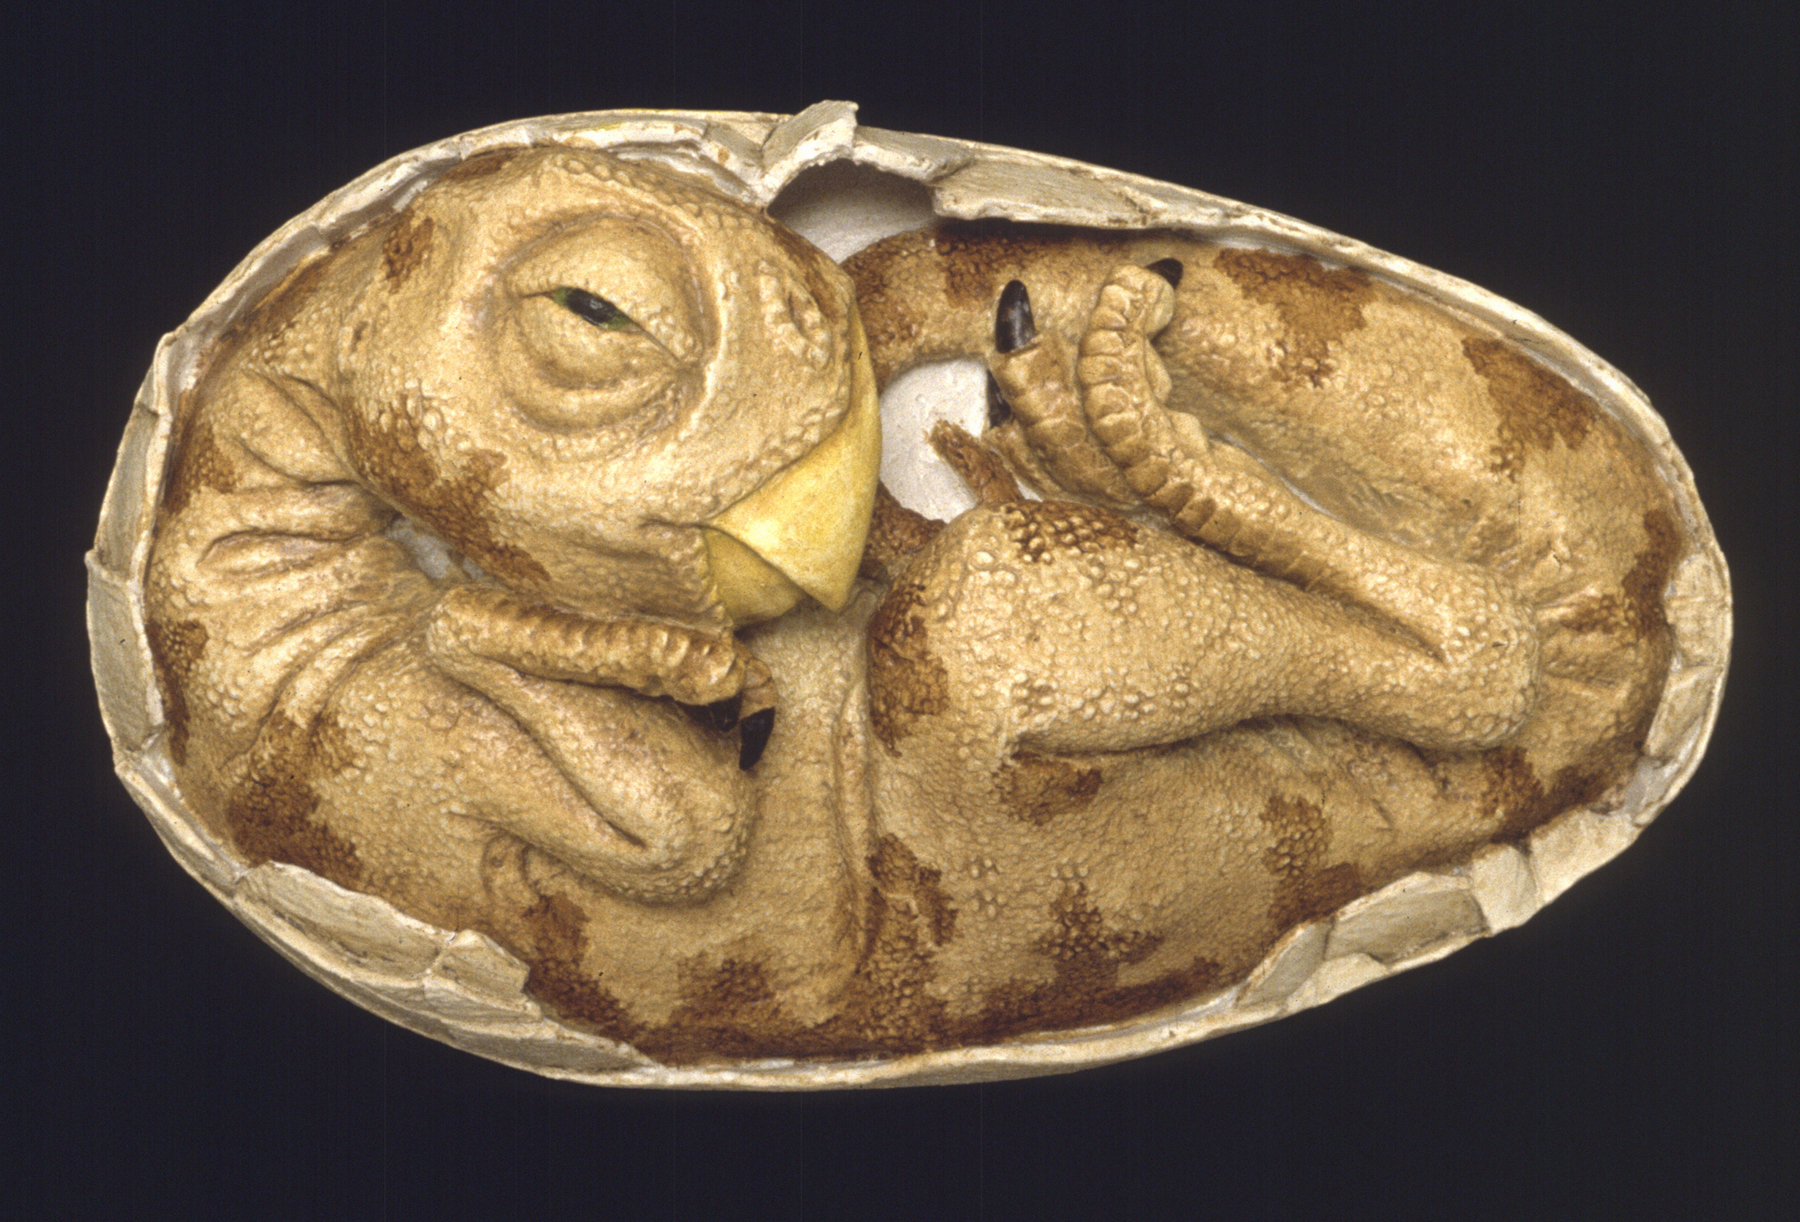 See fossilized dinosaur eggs, babies